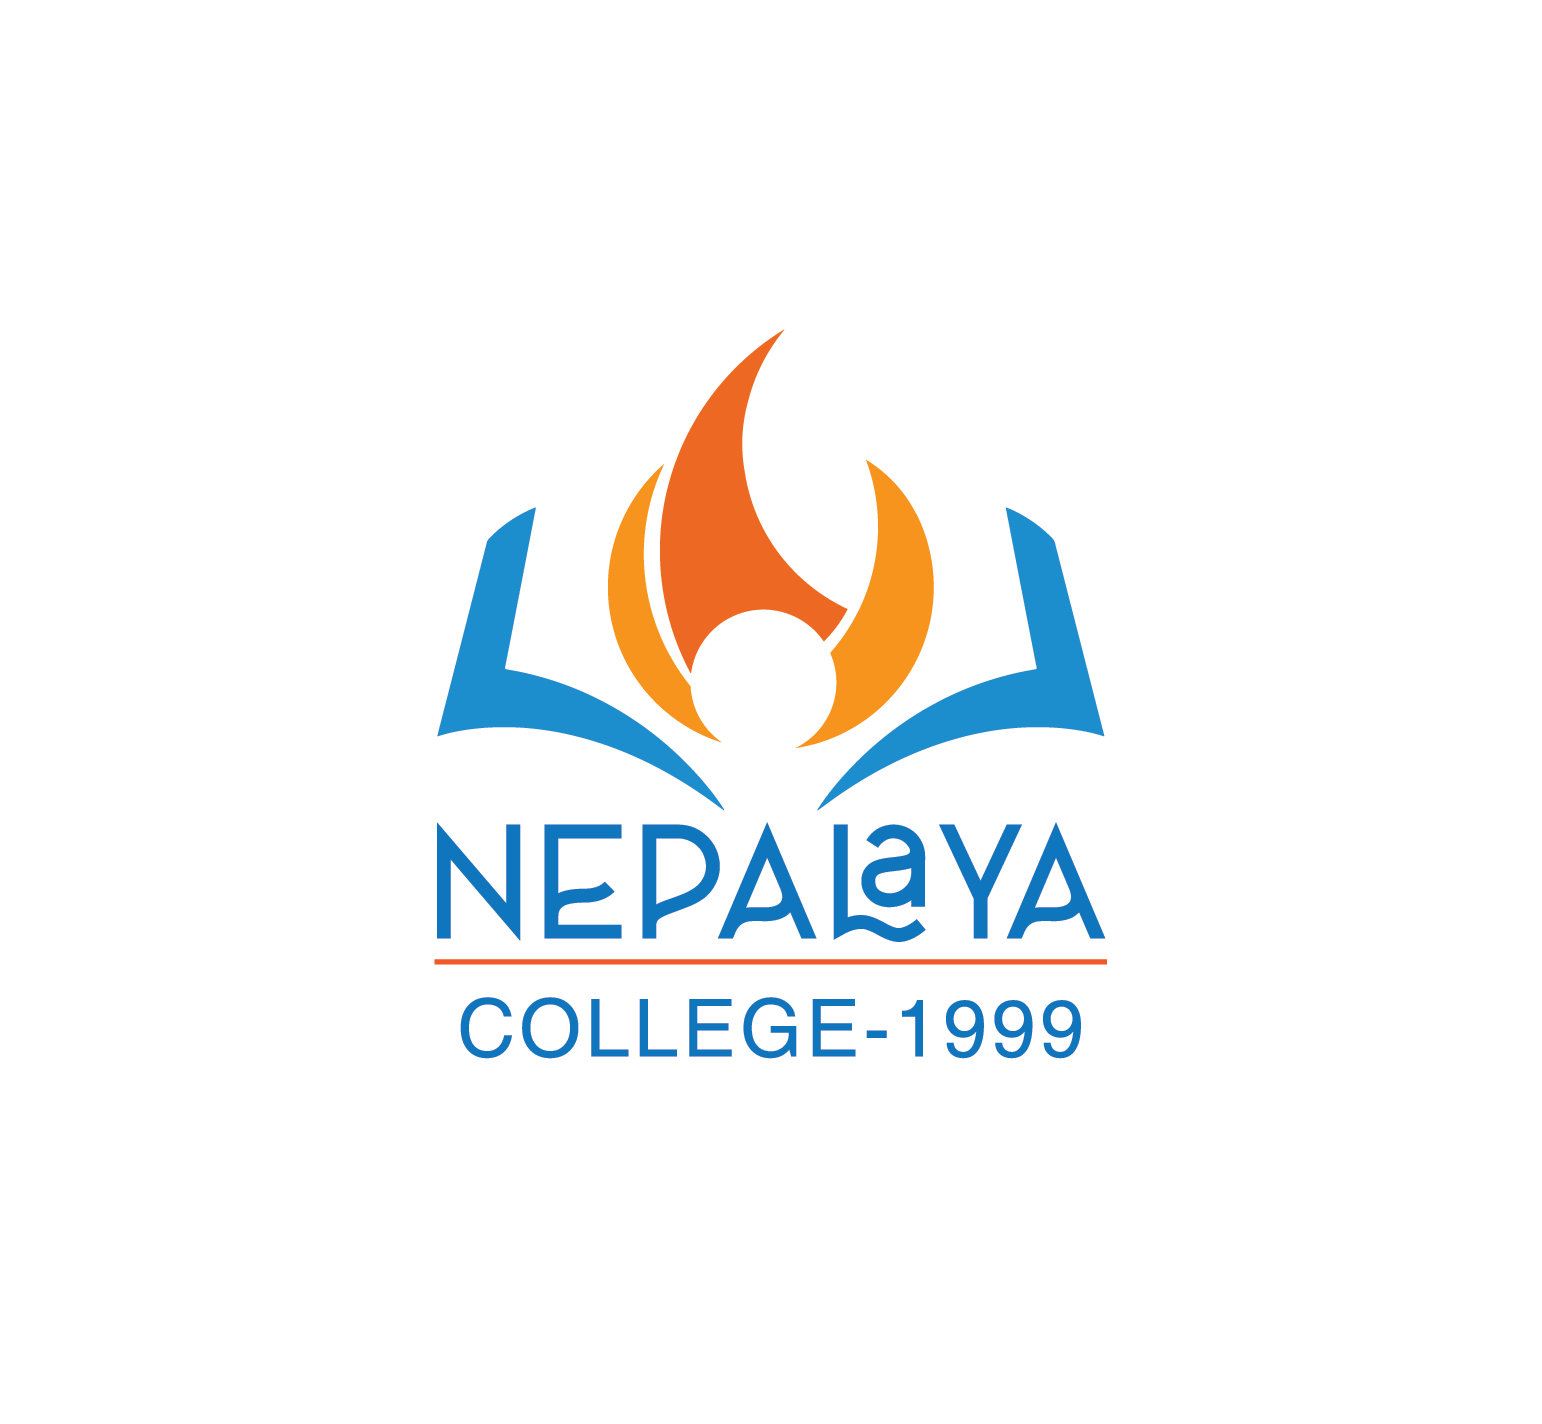 Nepalaya College logo